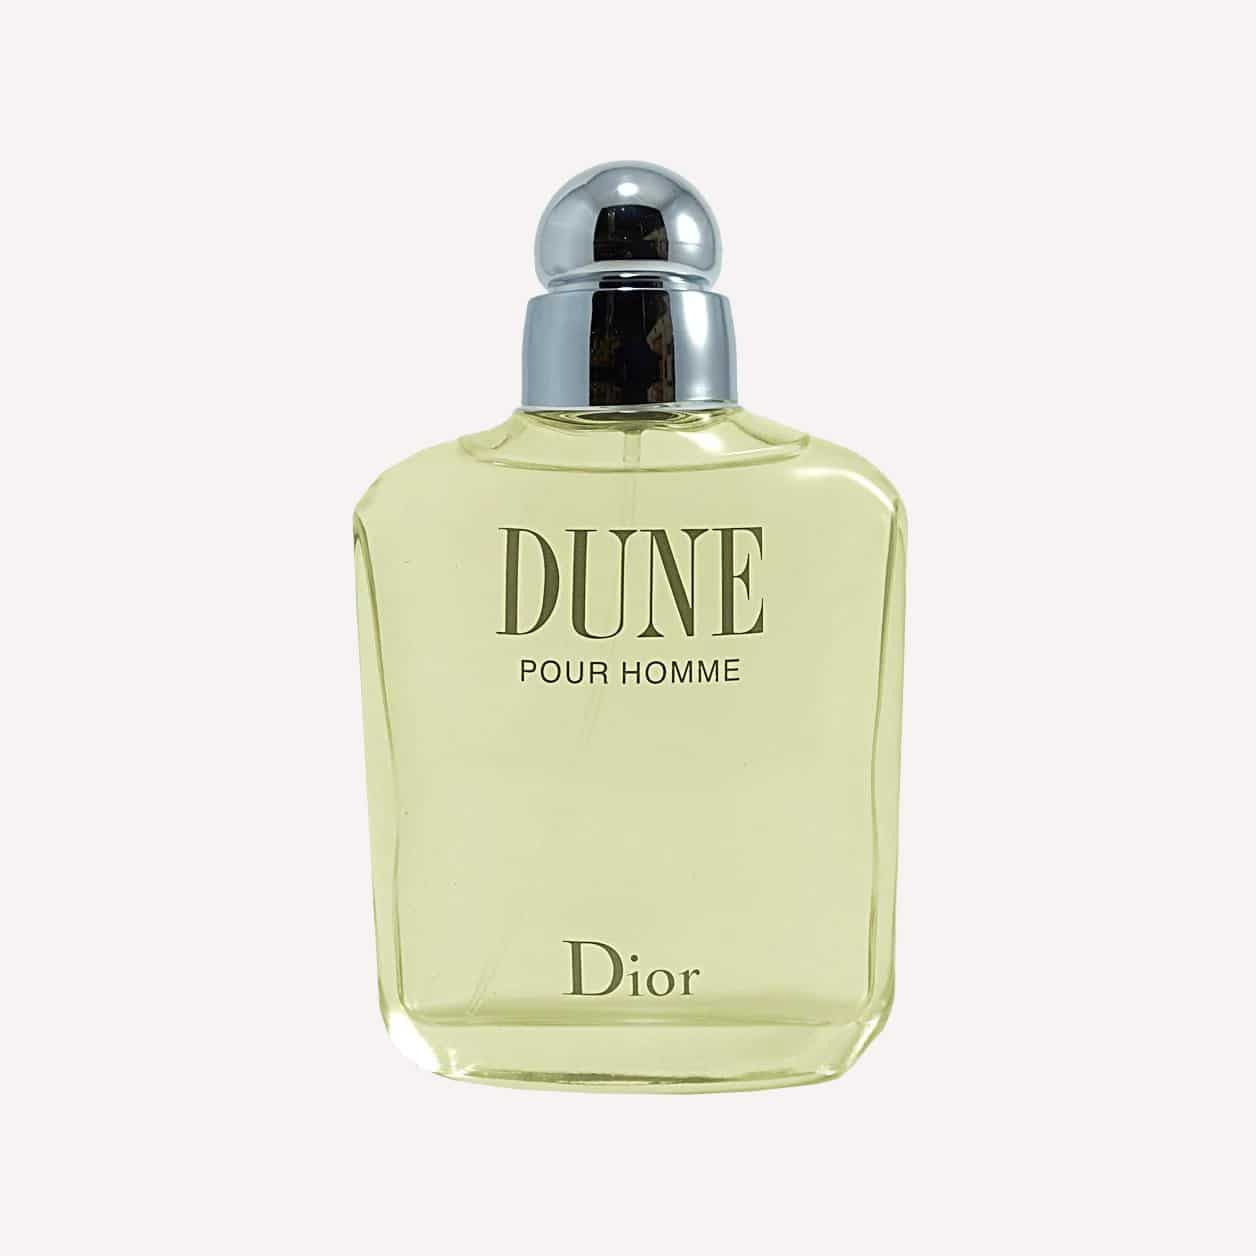 7 Best Dior Colognes For Men  Classy Fragrances for 2023  FashionBeans